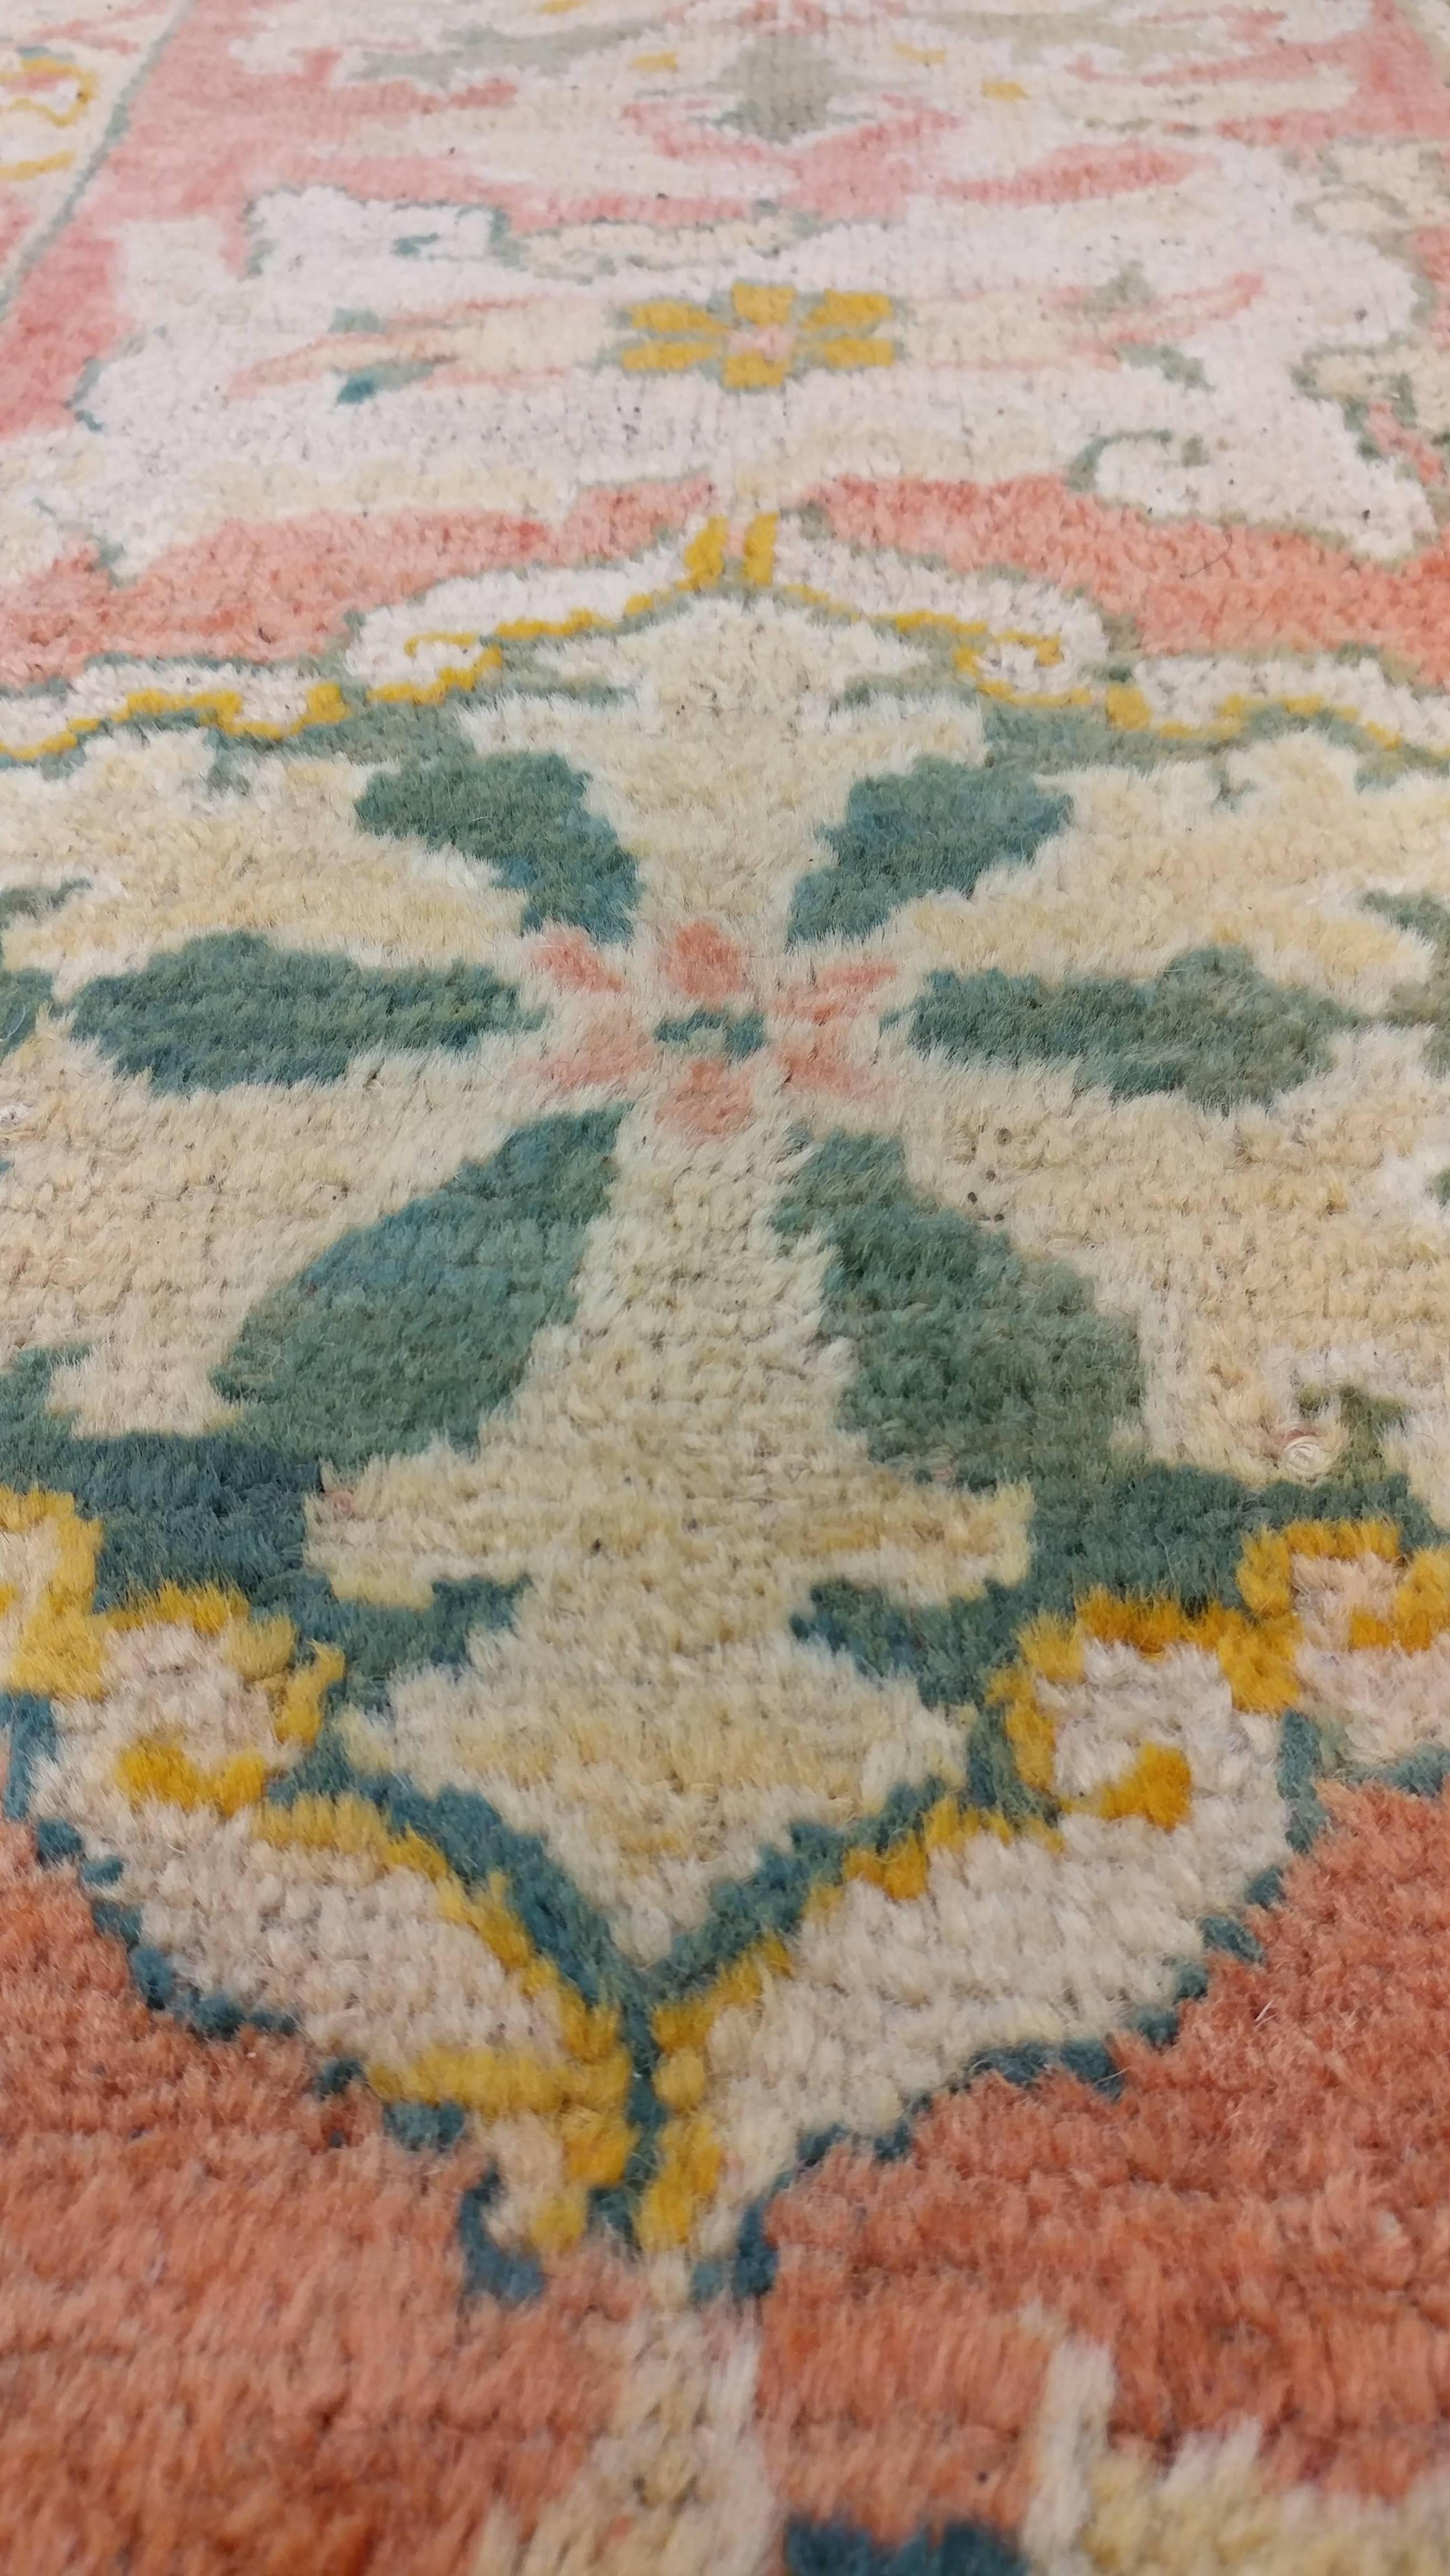 Late 19th Century Oushak Carpet, Turkish Rugs, Handmade Oriental Rugs, Blue Green Coral Rug